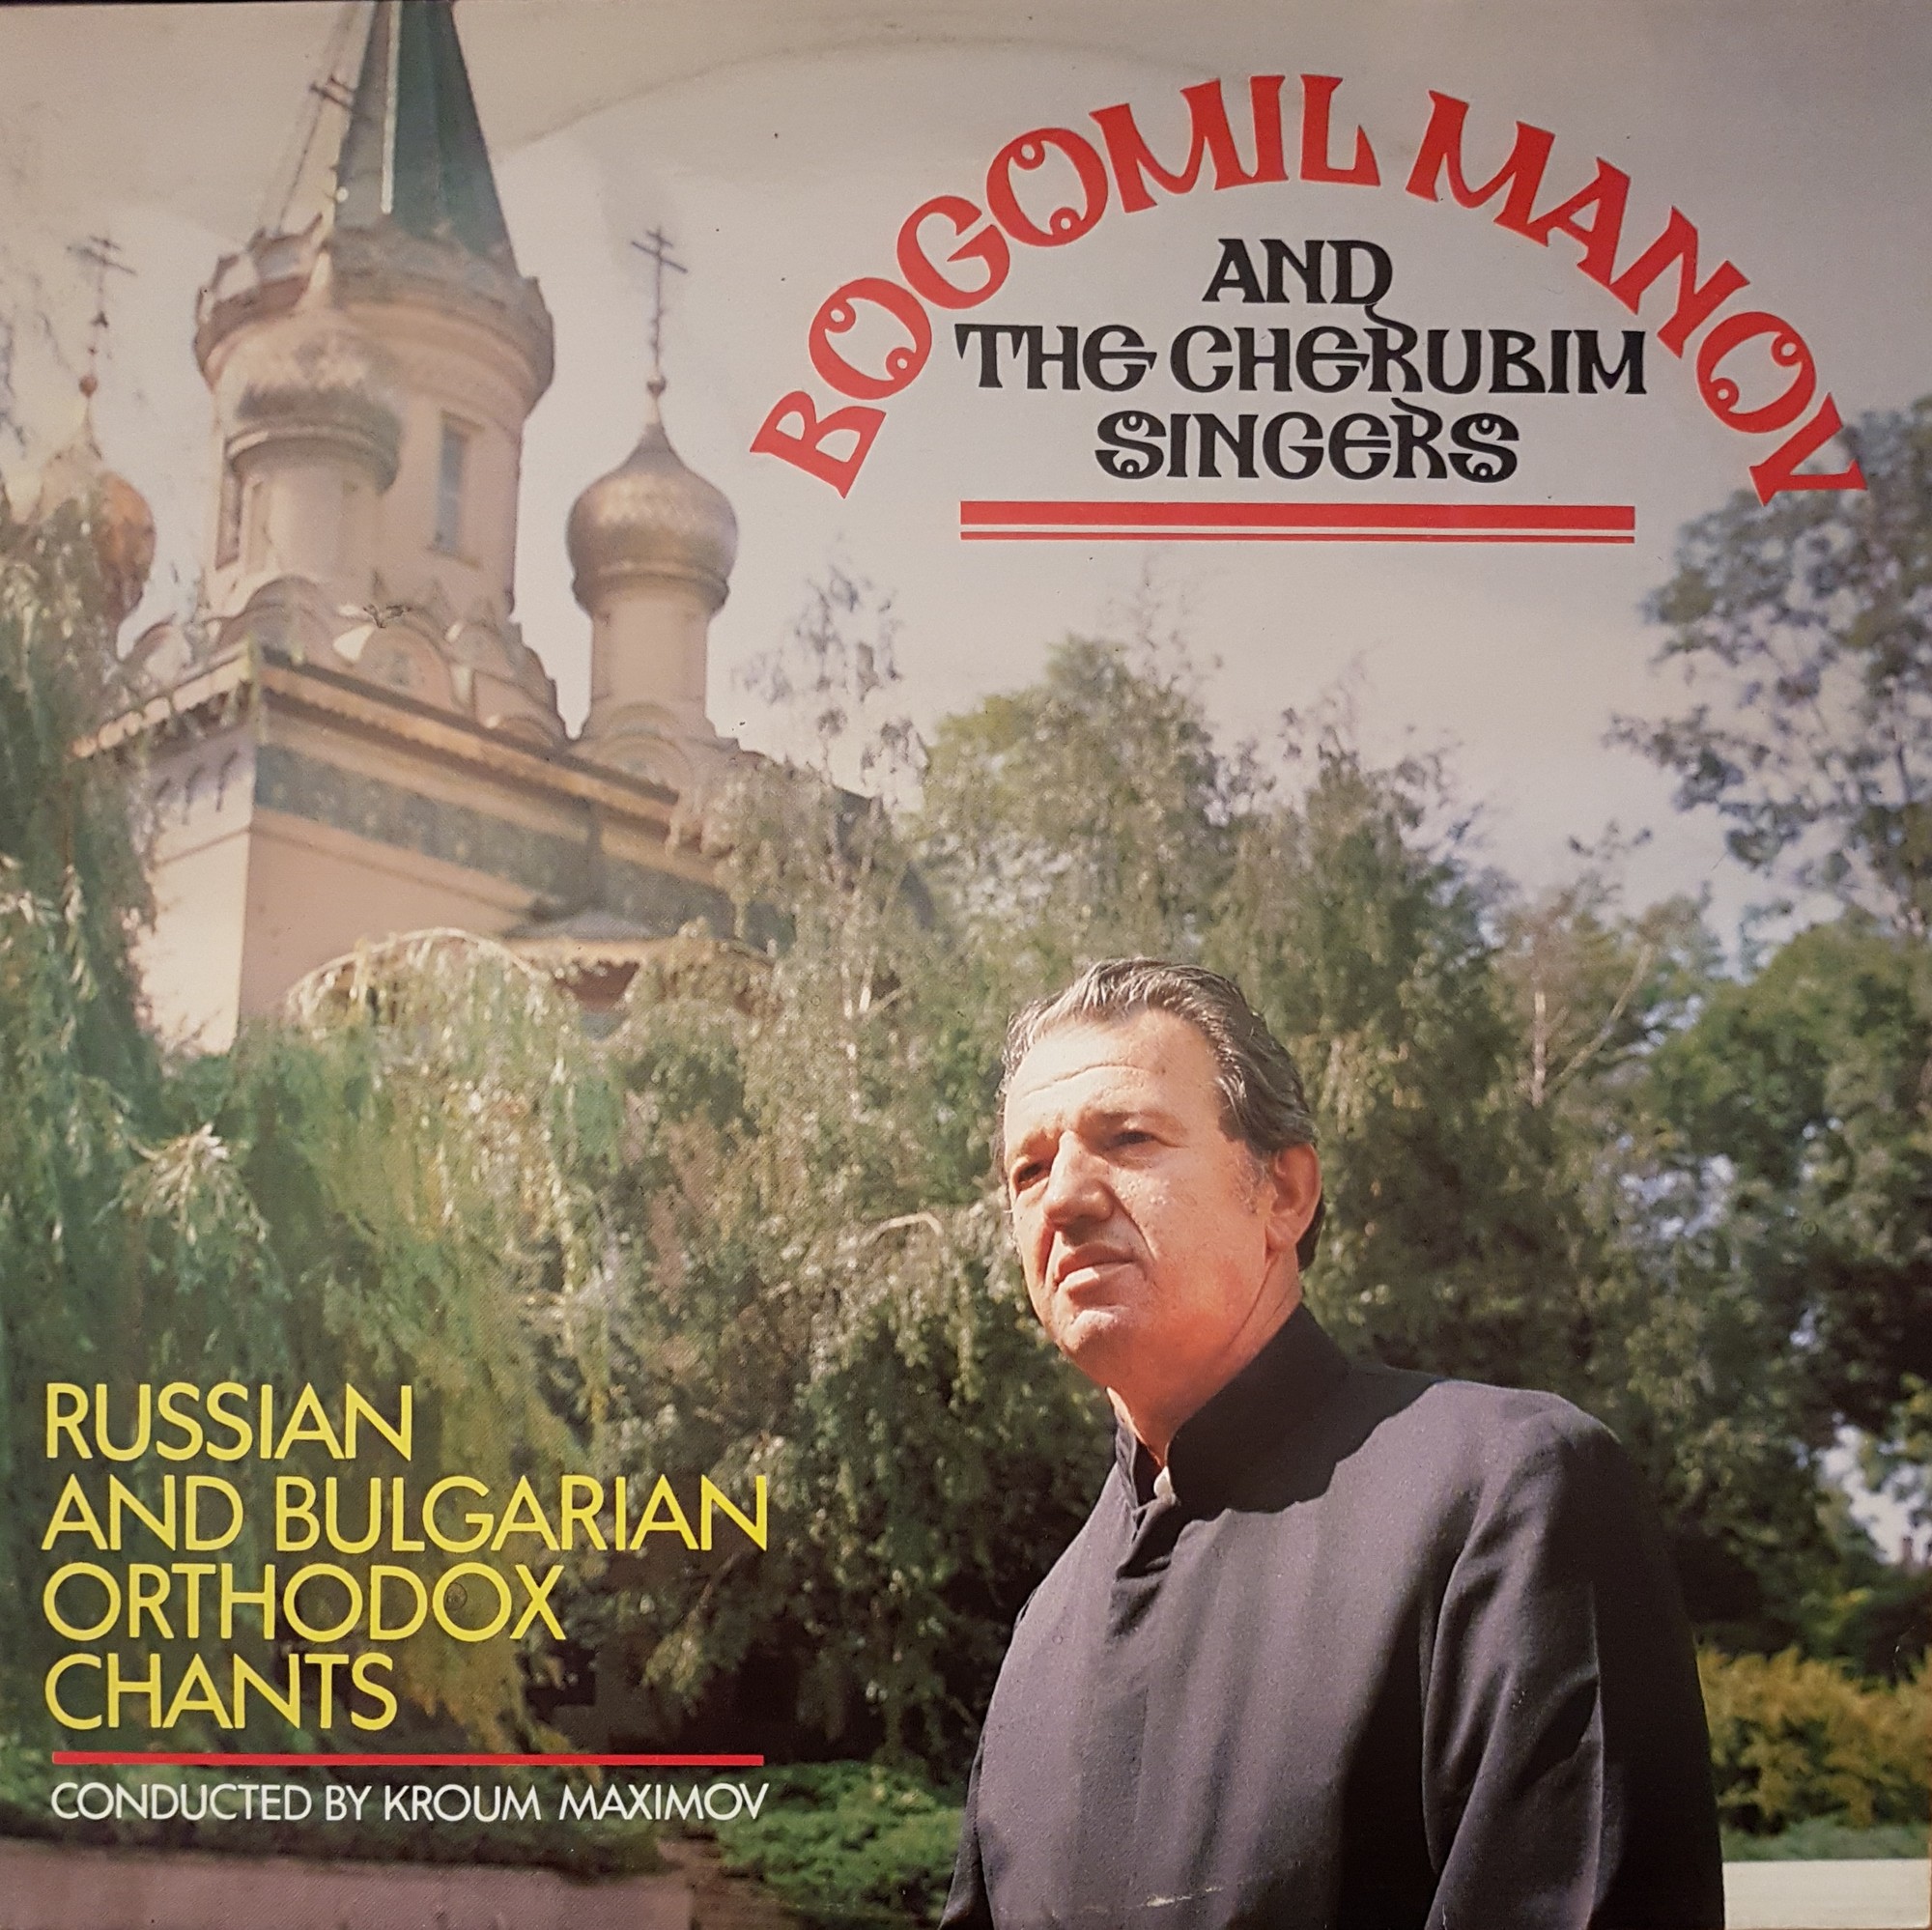 Bogomil Manov and the Cherubim Singers. Russian and Bulgarian orthodox chants. Cond. by Kroum Maximov